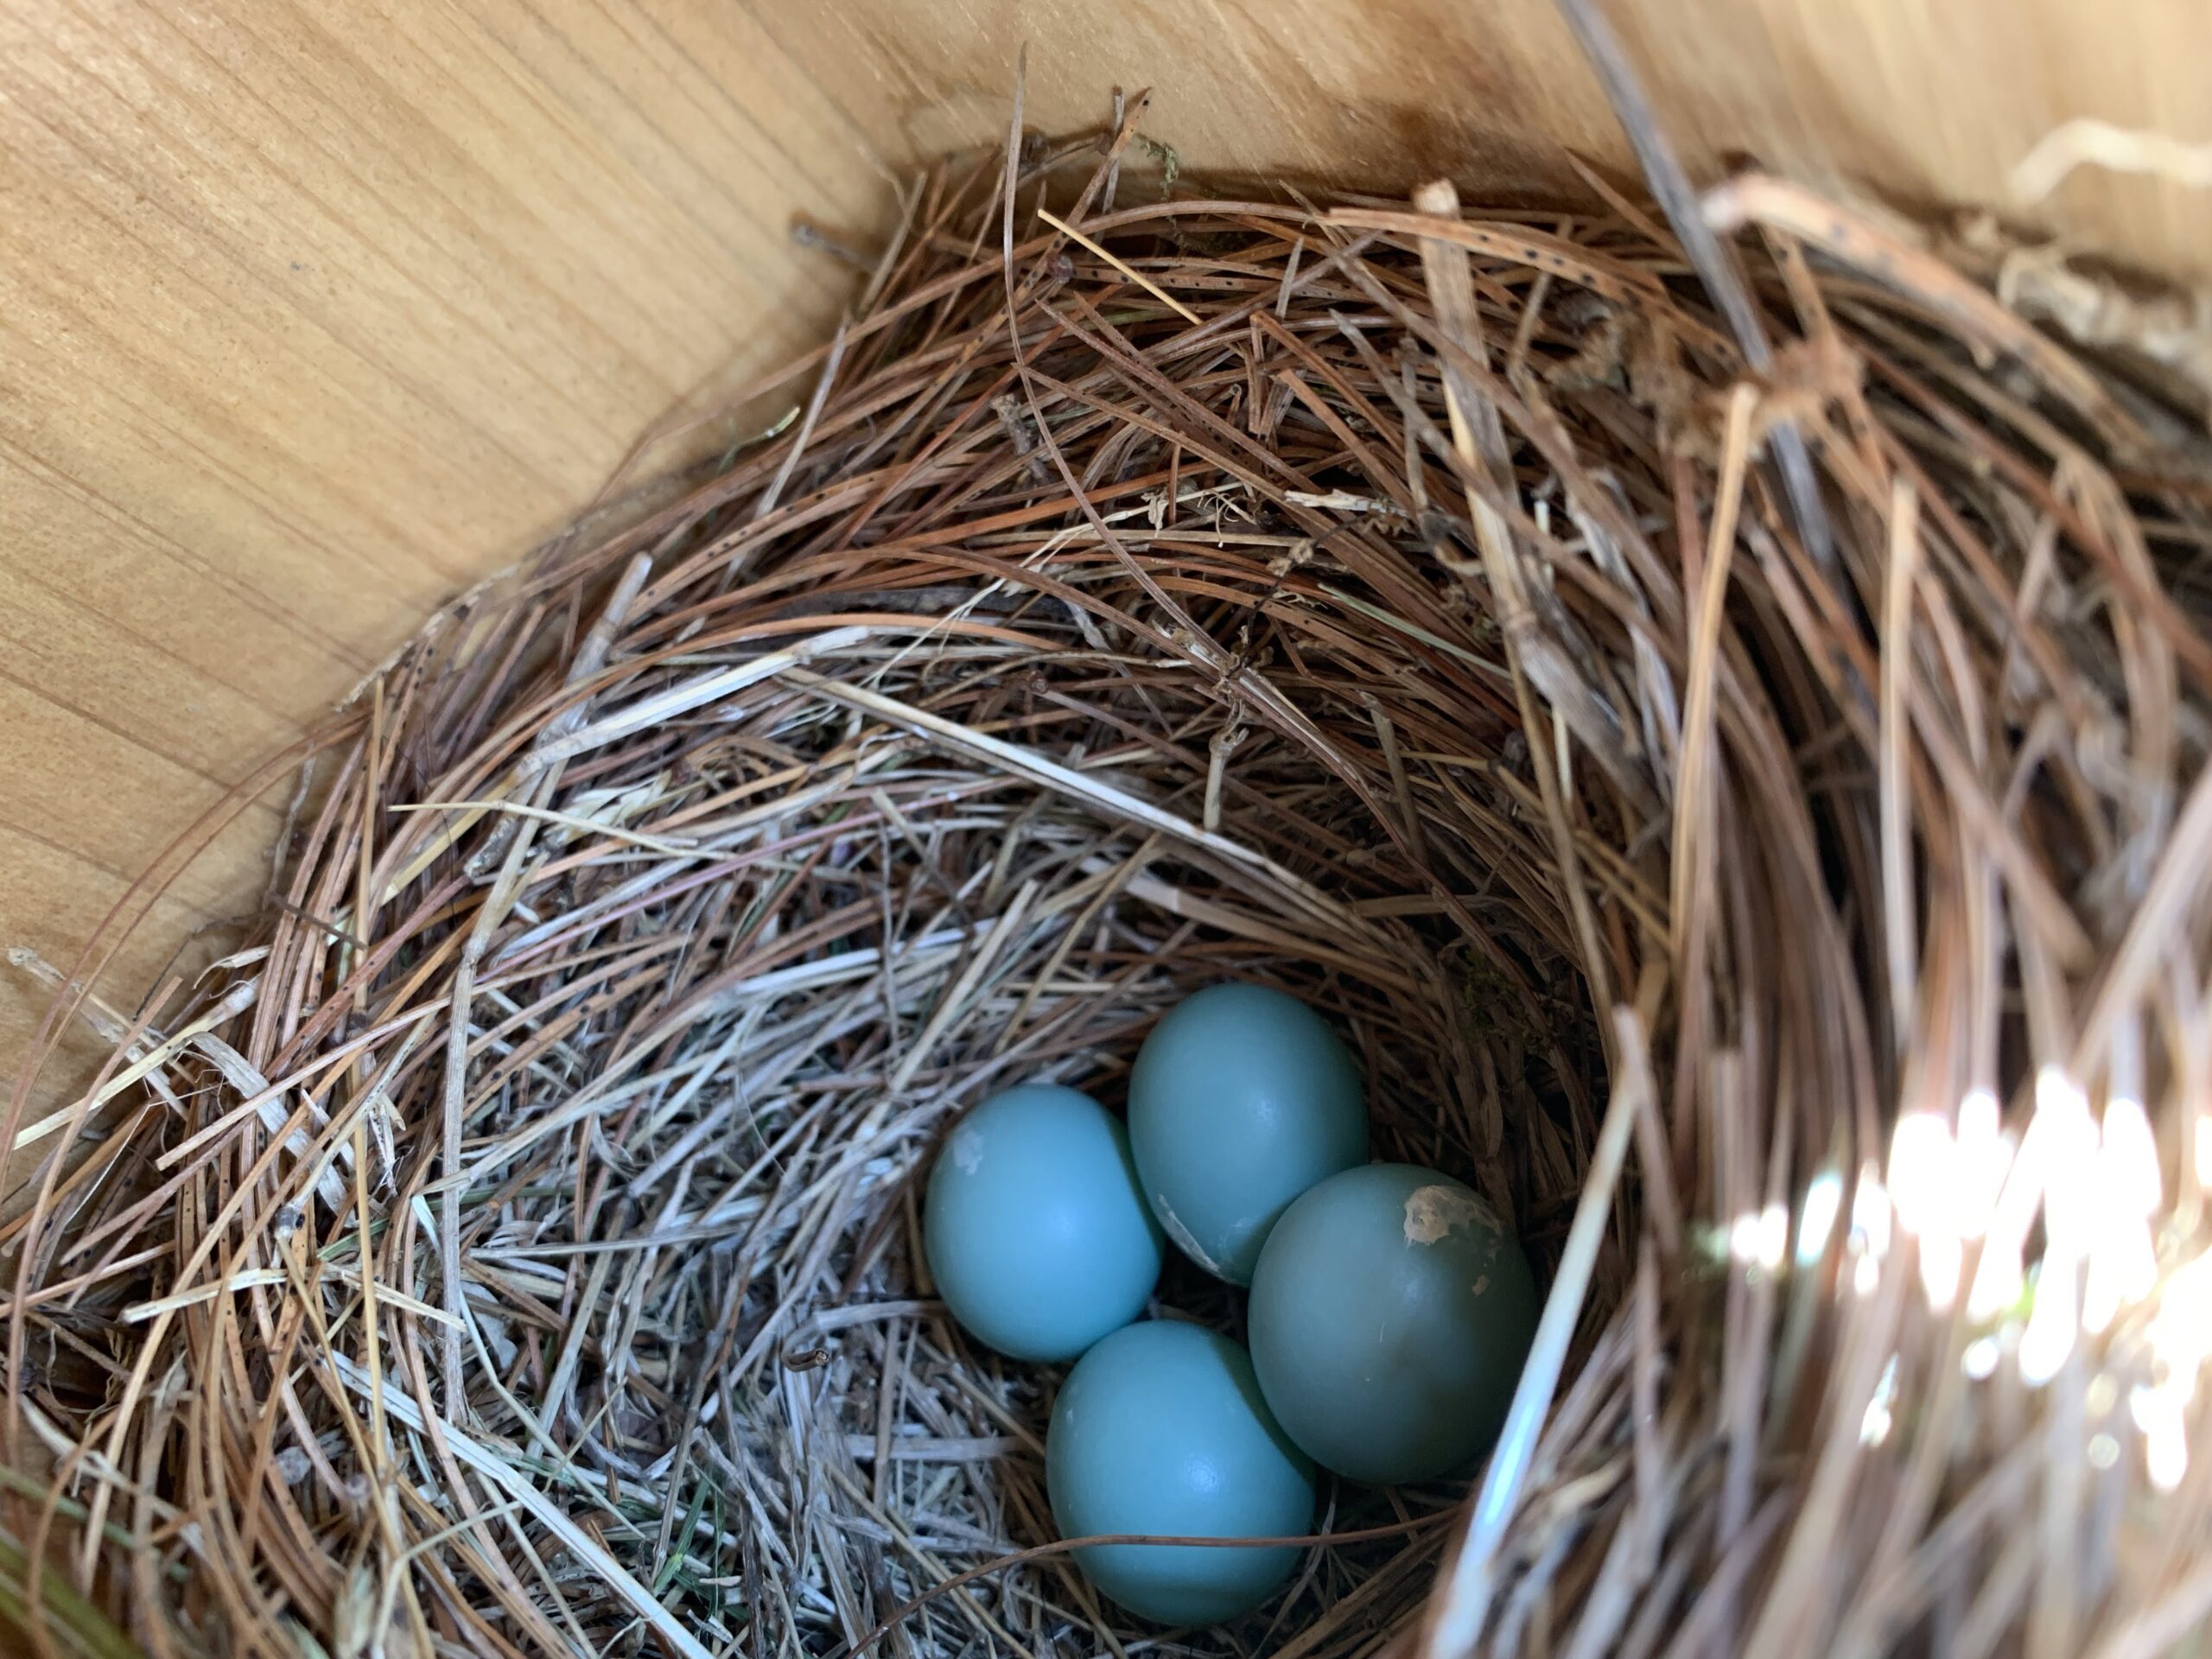 Bluebird eggs inside a nest in a birdhouse taken with Blink camera